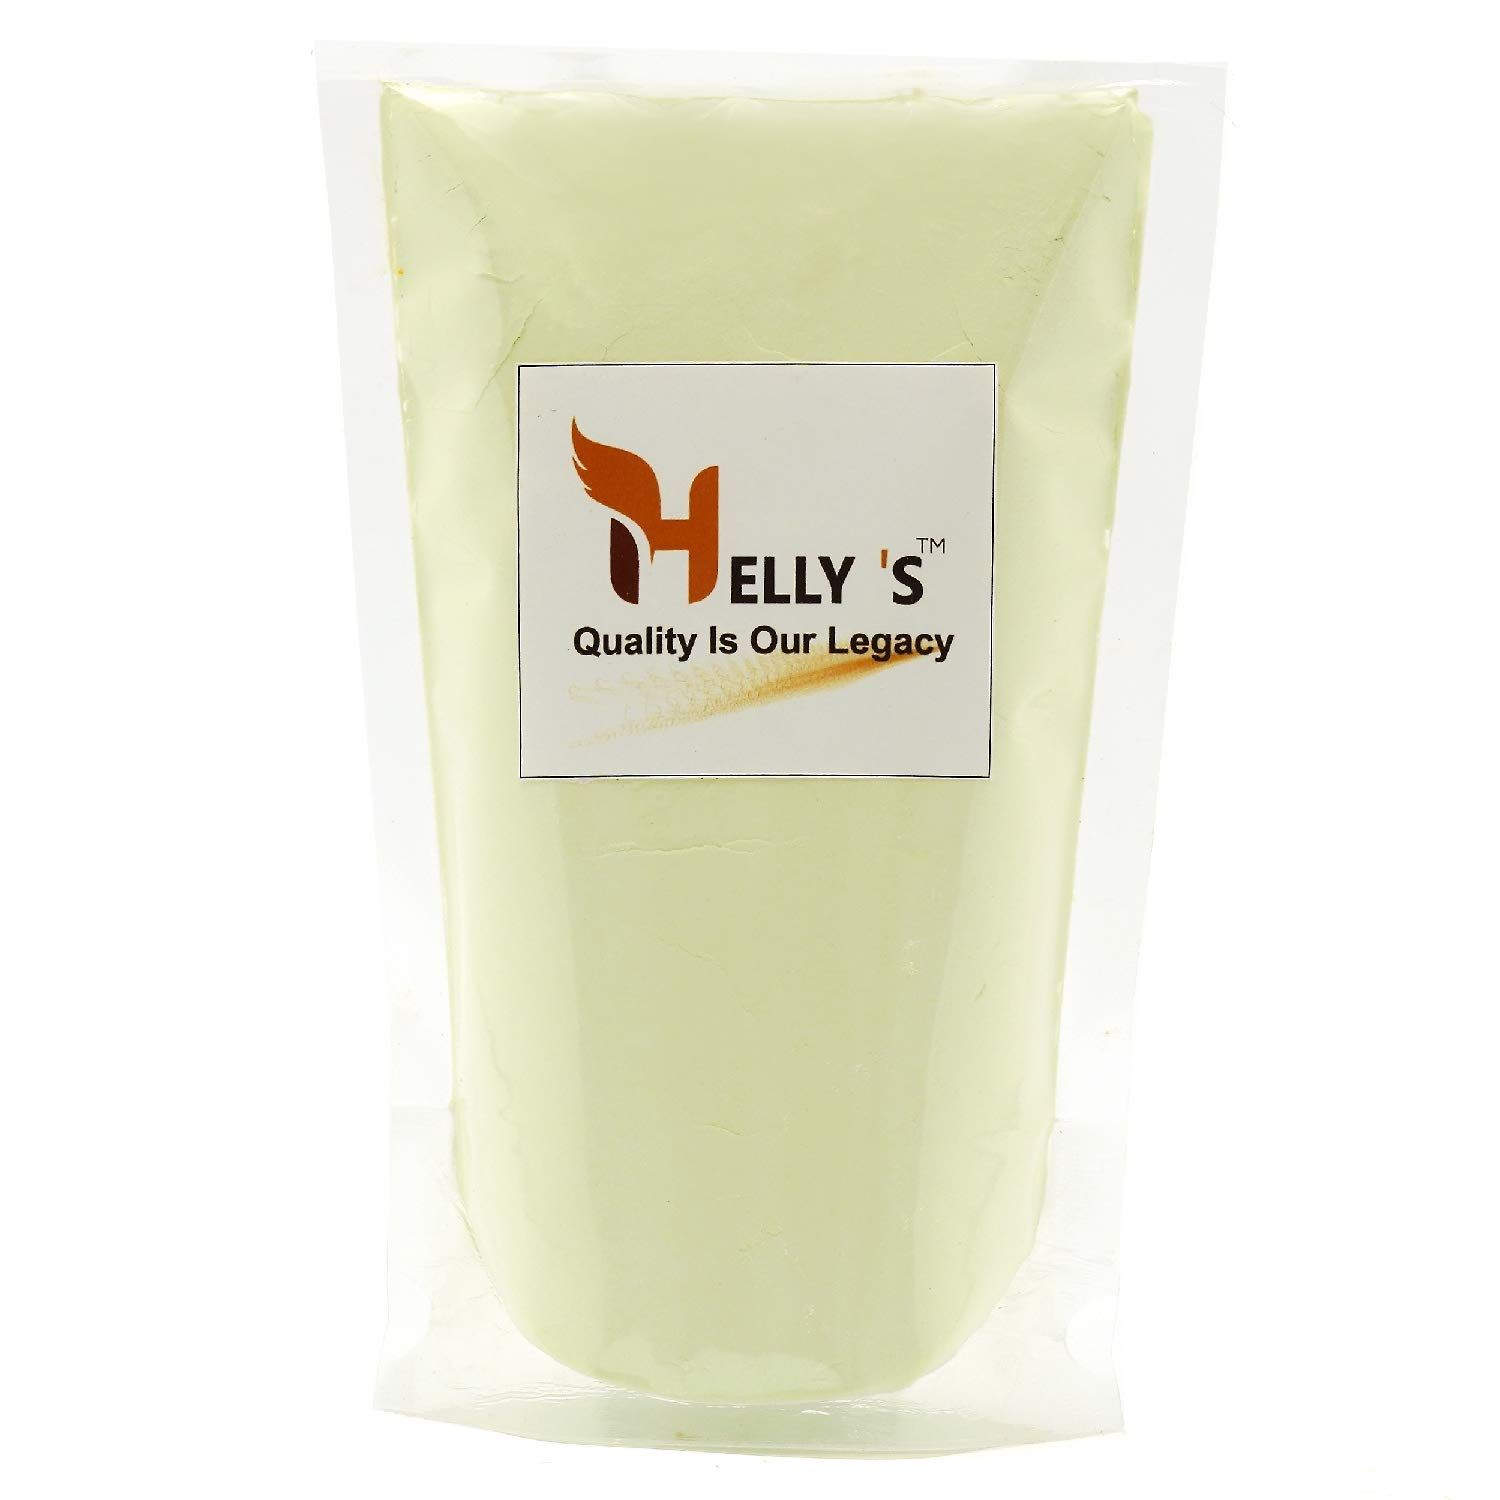 Helly's Eggless Custard Powder Pista Flavour Image